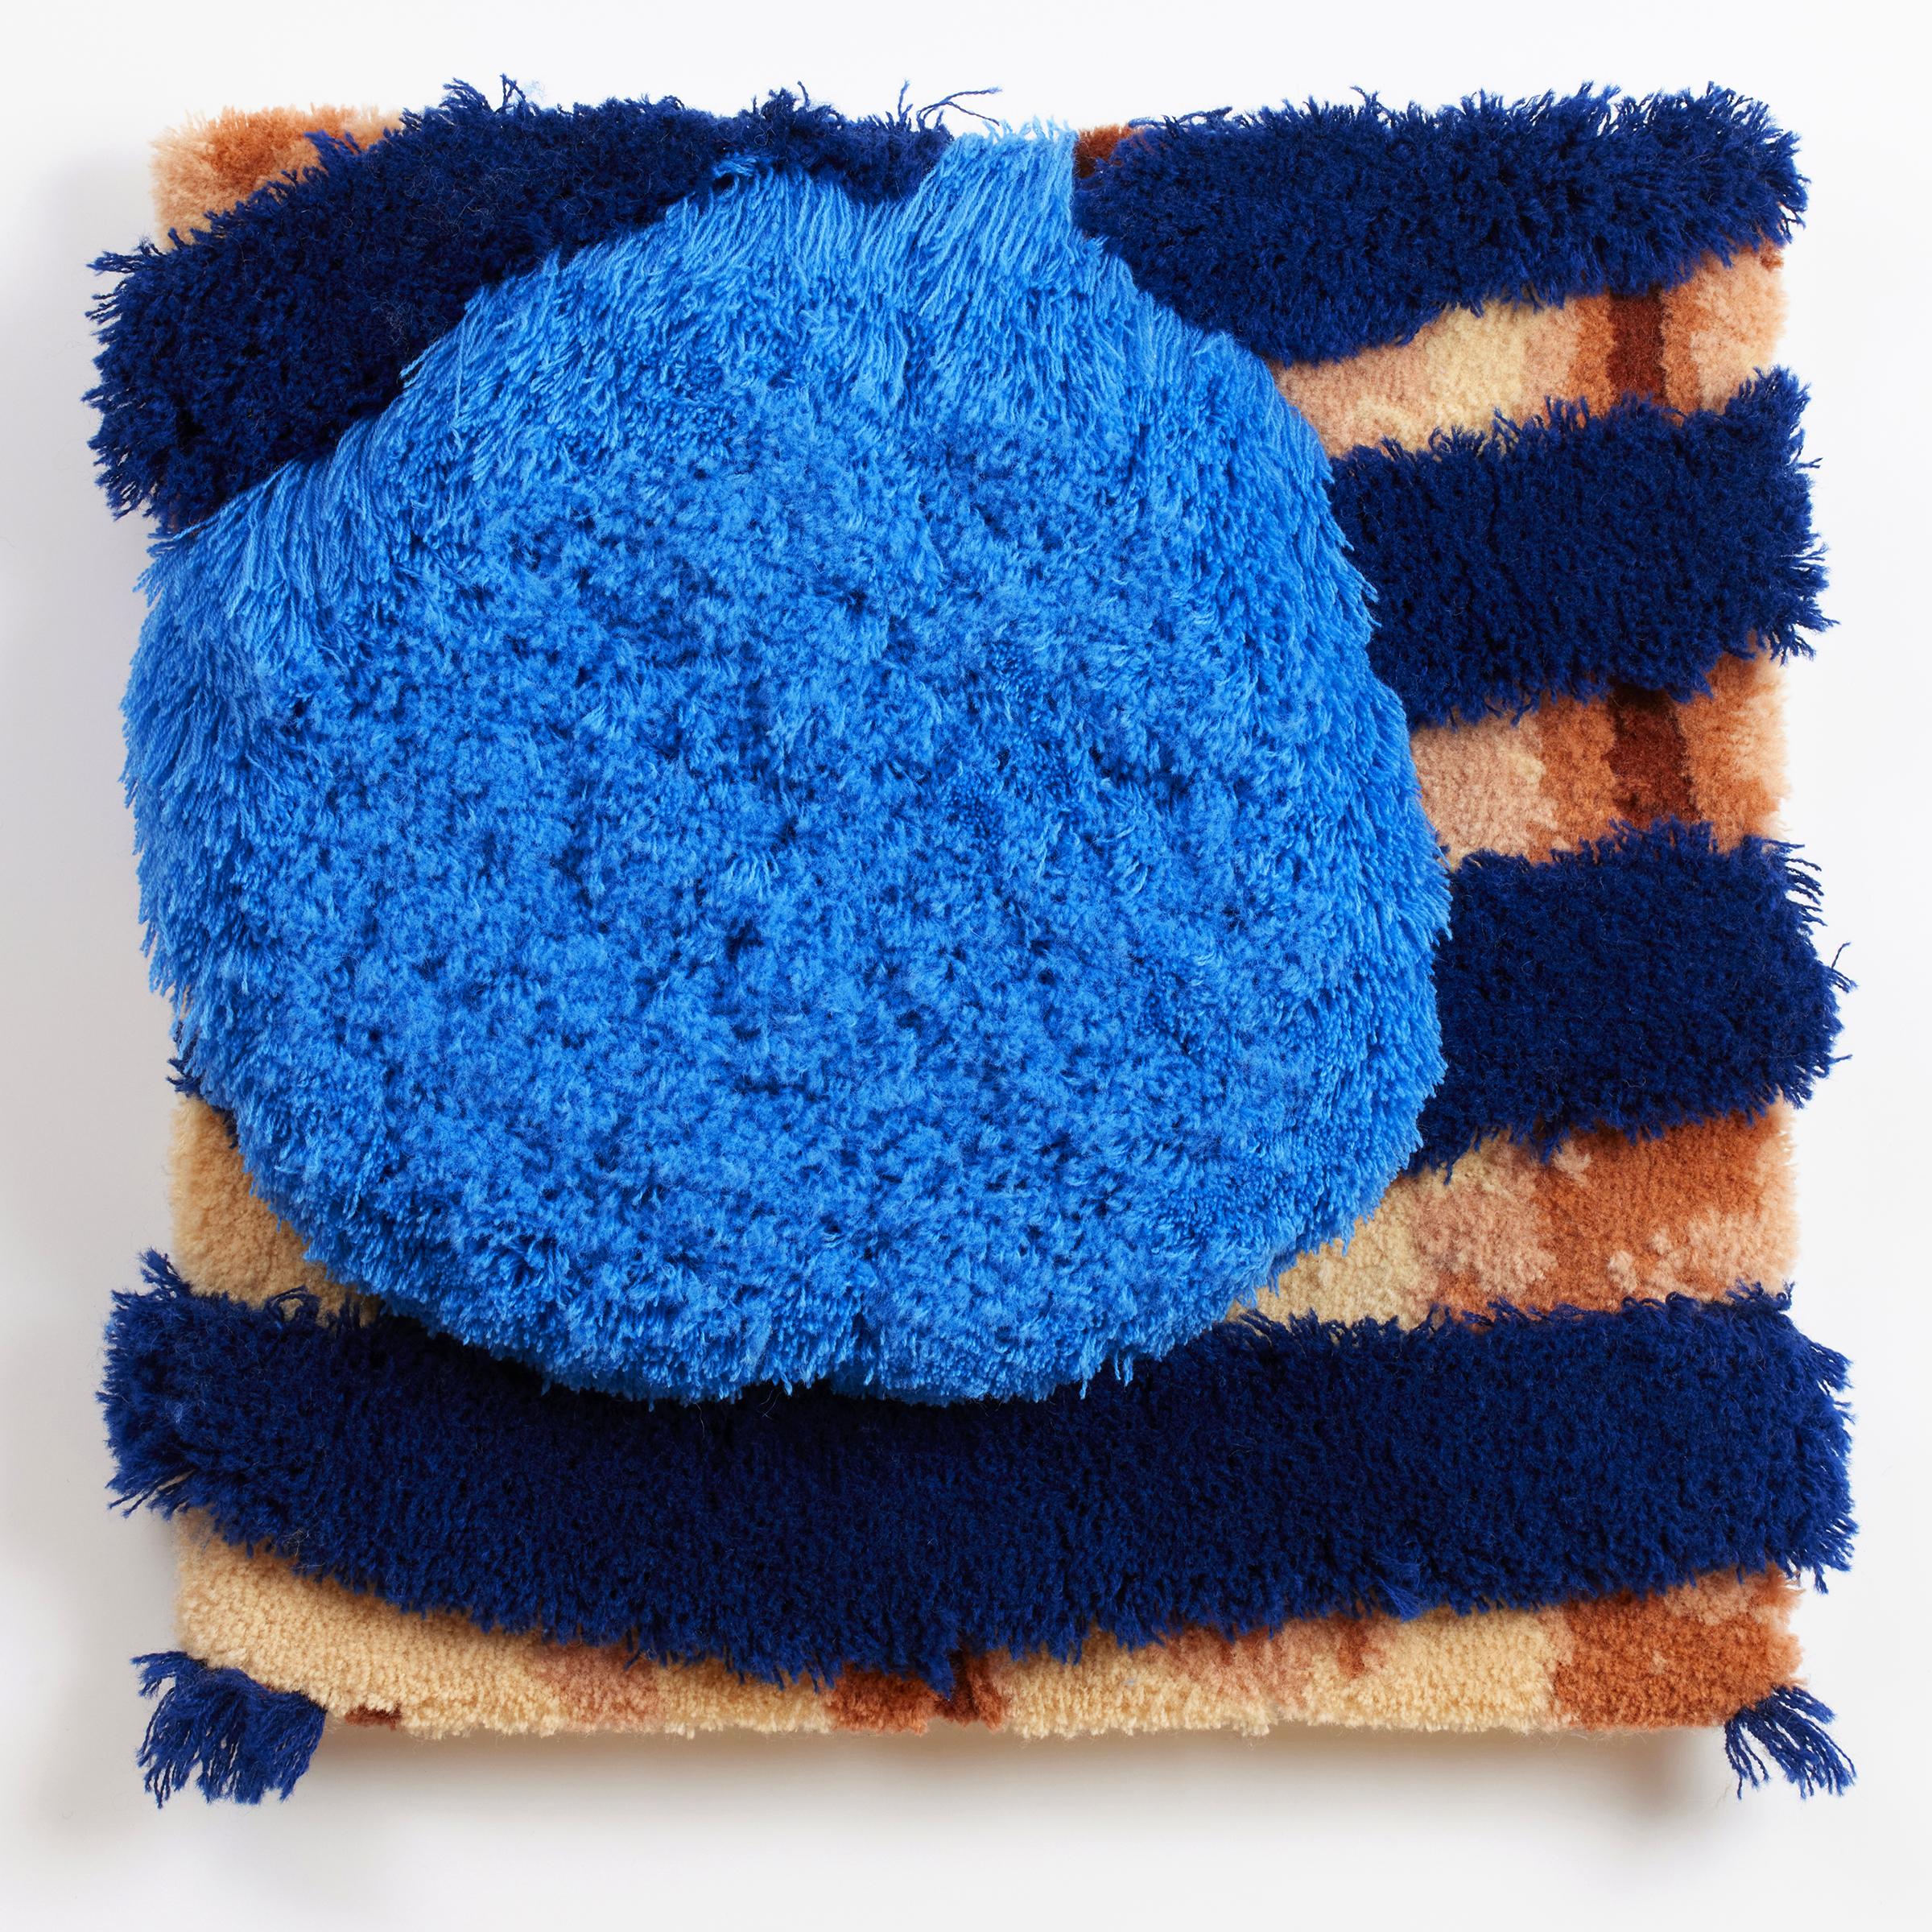 Trish Andersen Abstract Sculpture - 'Blue Boy' - contemporary fiber art, texture, pattern, stripes, tuft